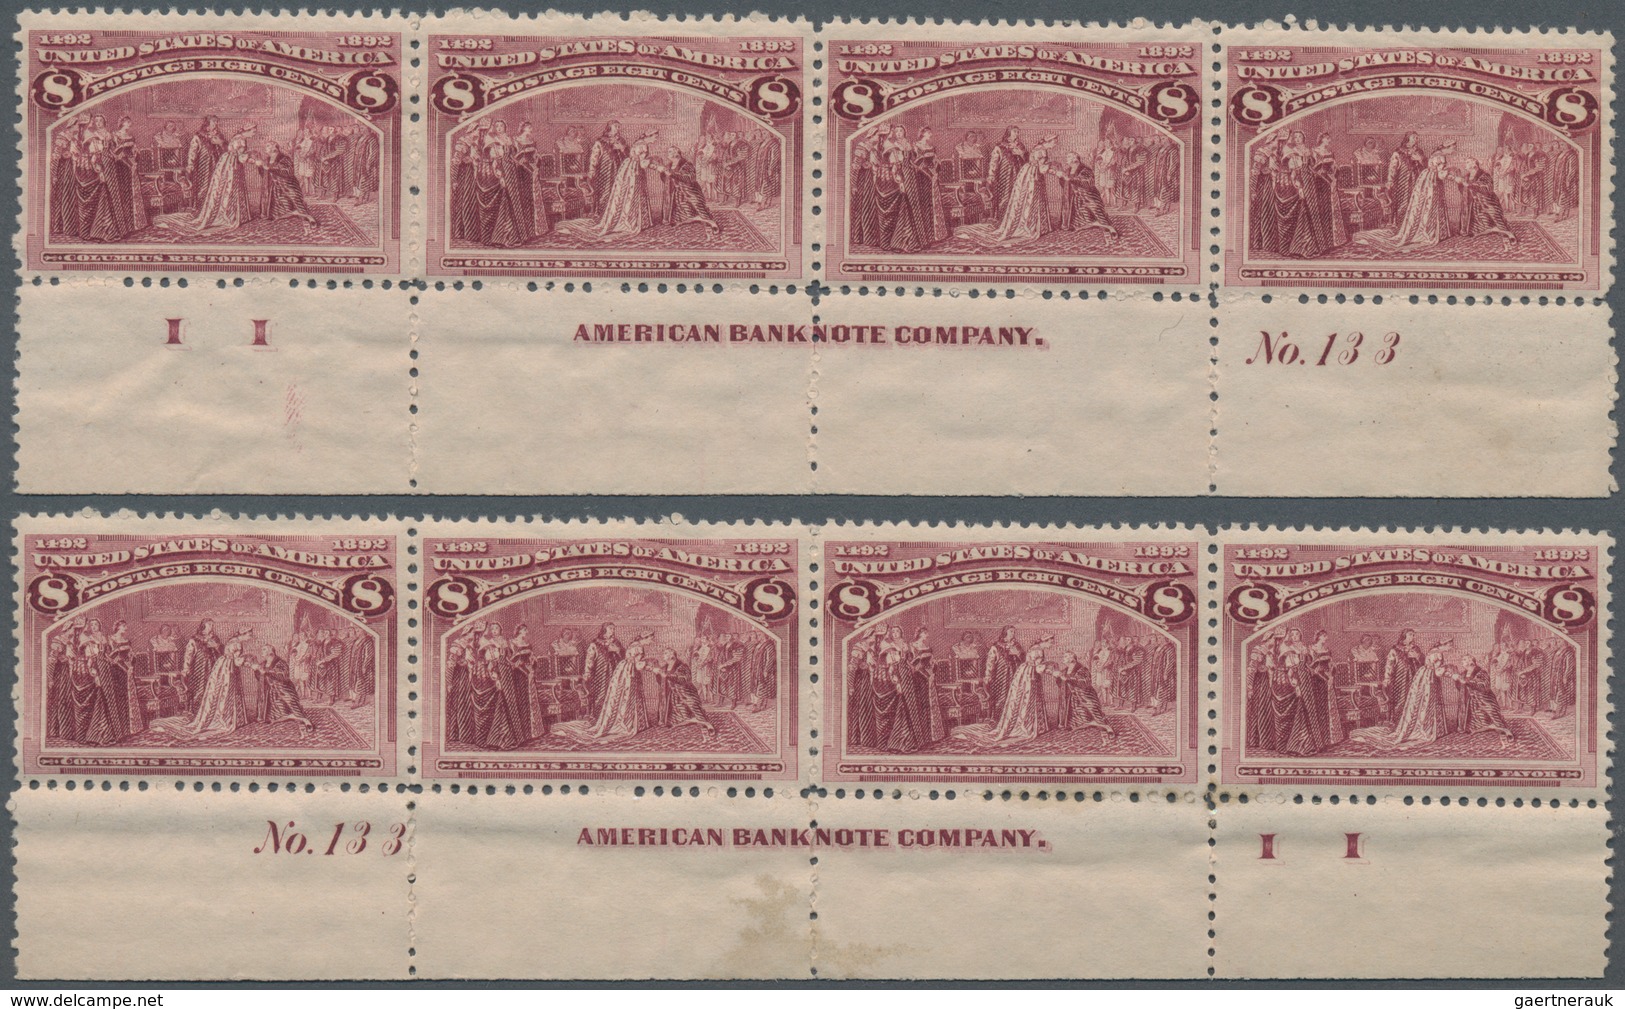 Vereinigte Staaten von Amerika: Columbian Issue plate no. and imprint strips of four, 2c (7), 3c, 4c